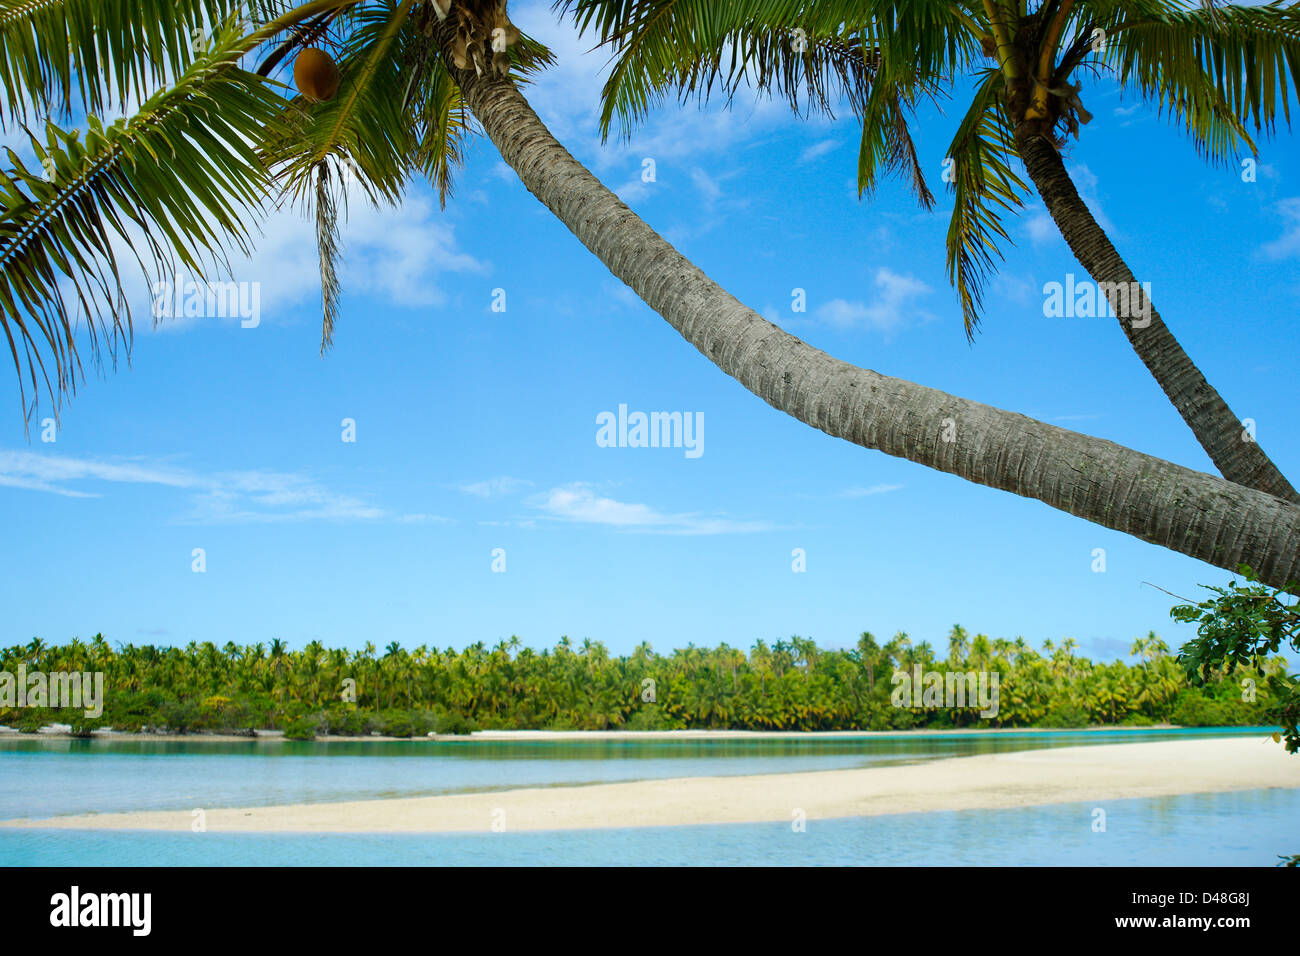 Coconut palm trees lean over a beautiful beach Stock Photo - Alamy